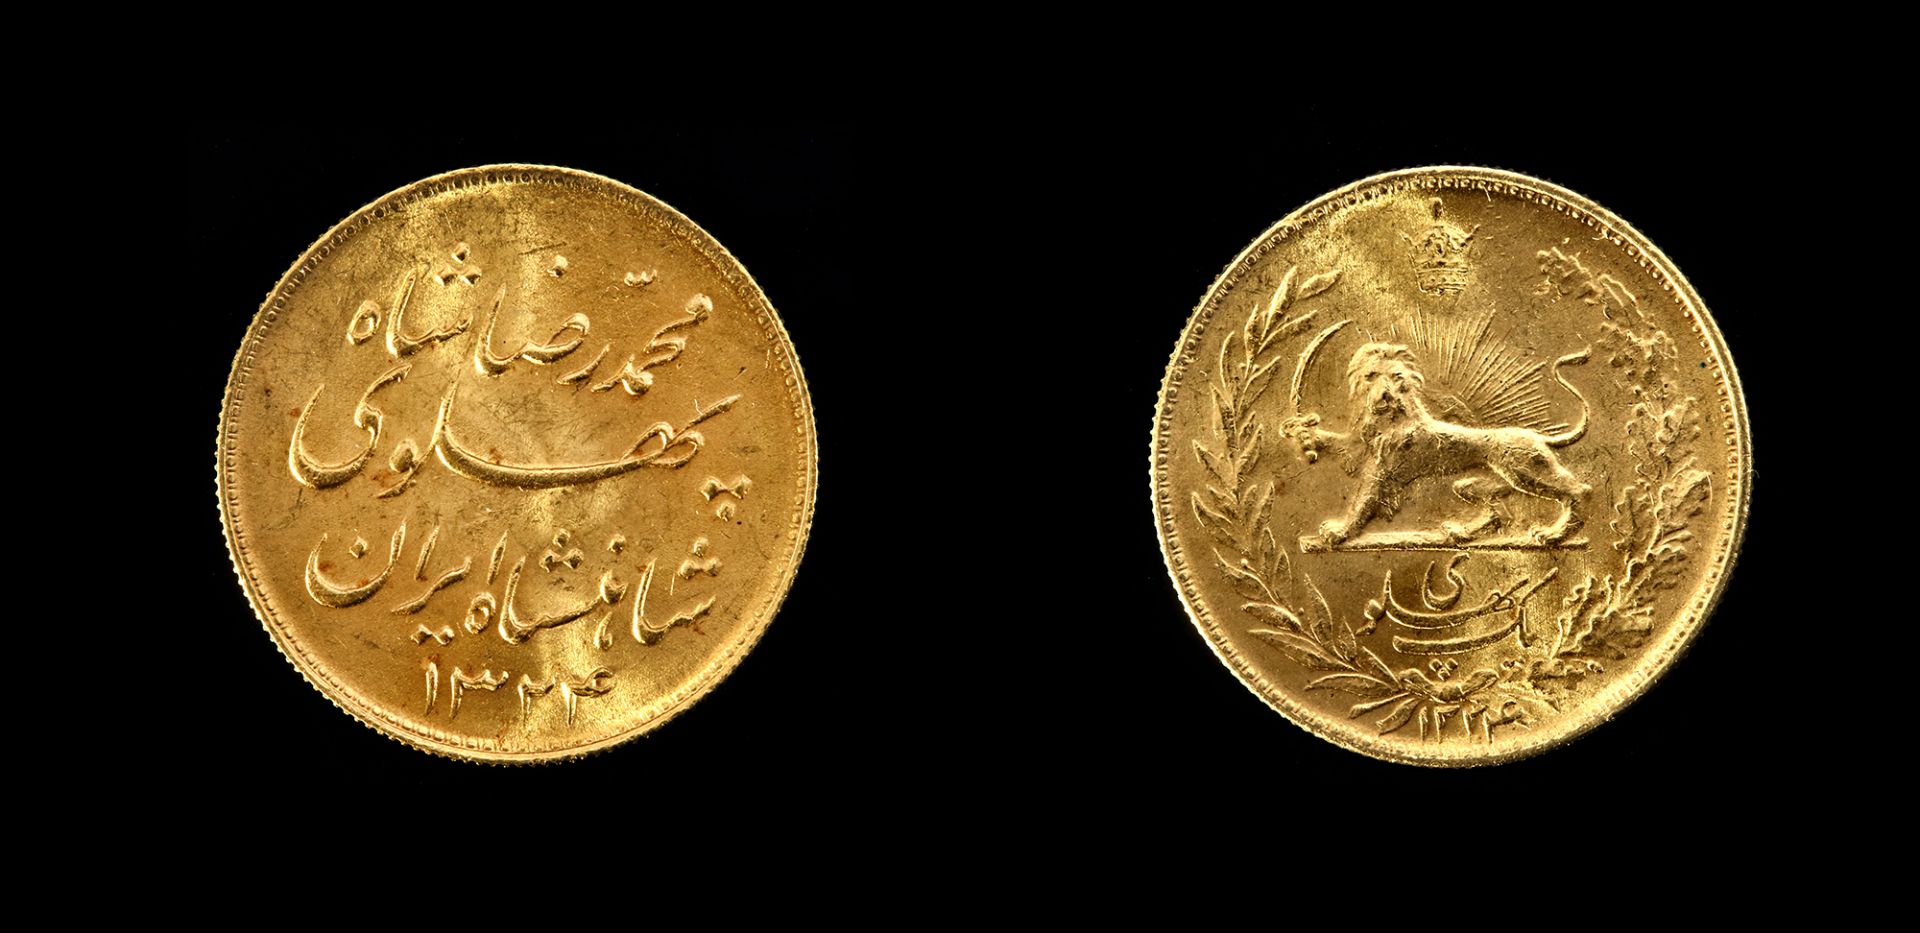 A PERSIAN GOLD PAHLAVI